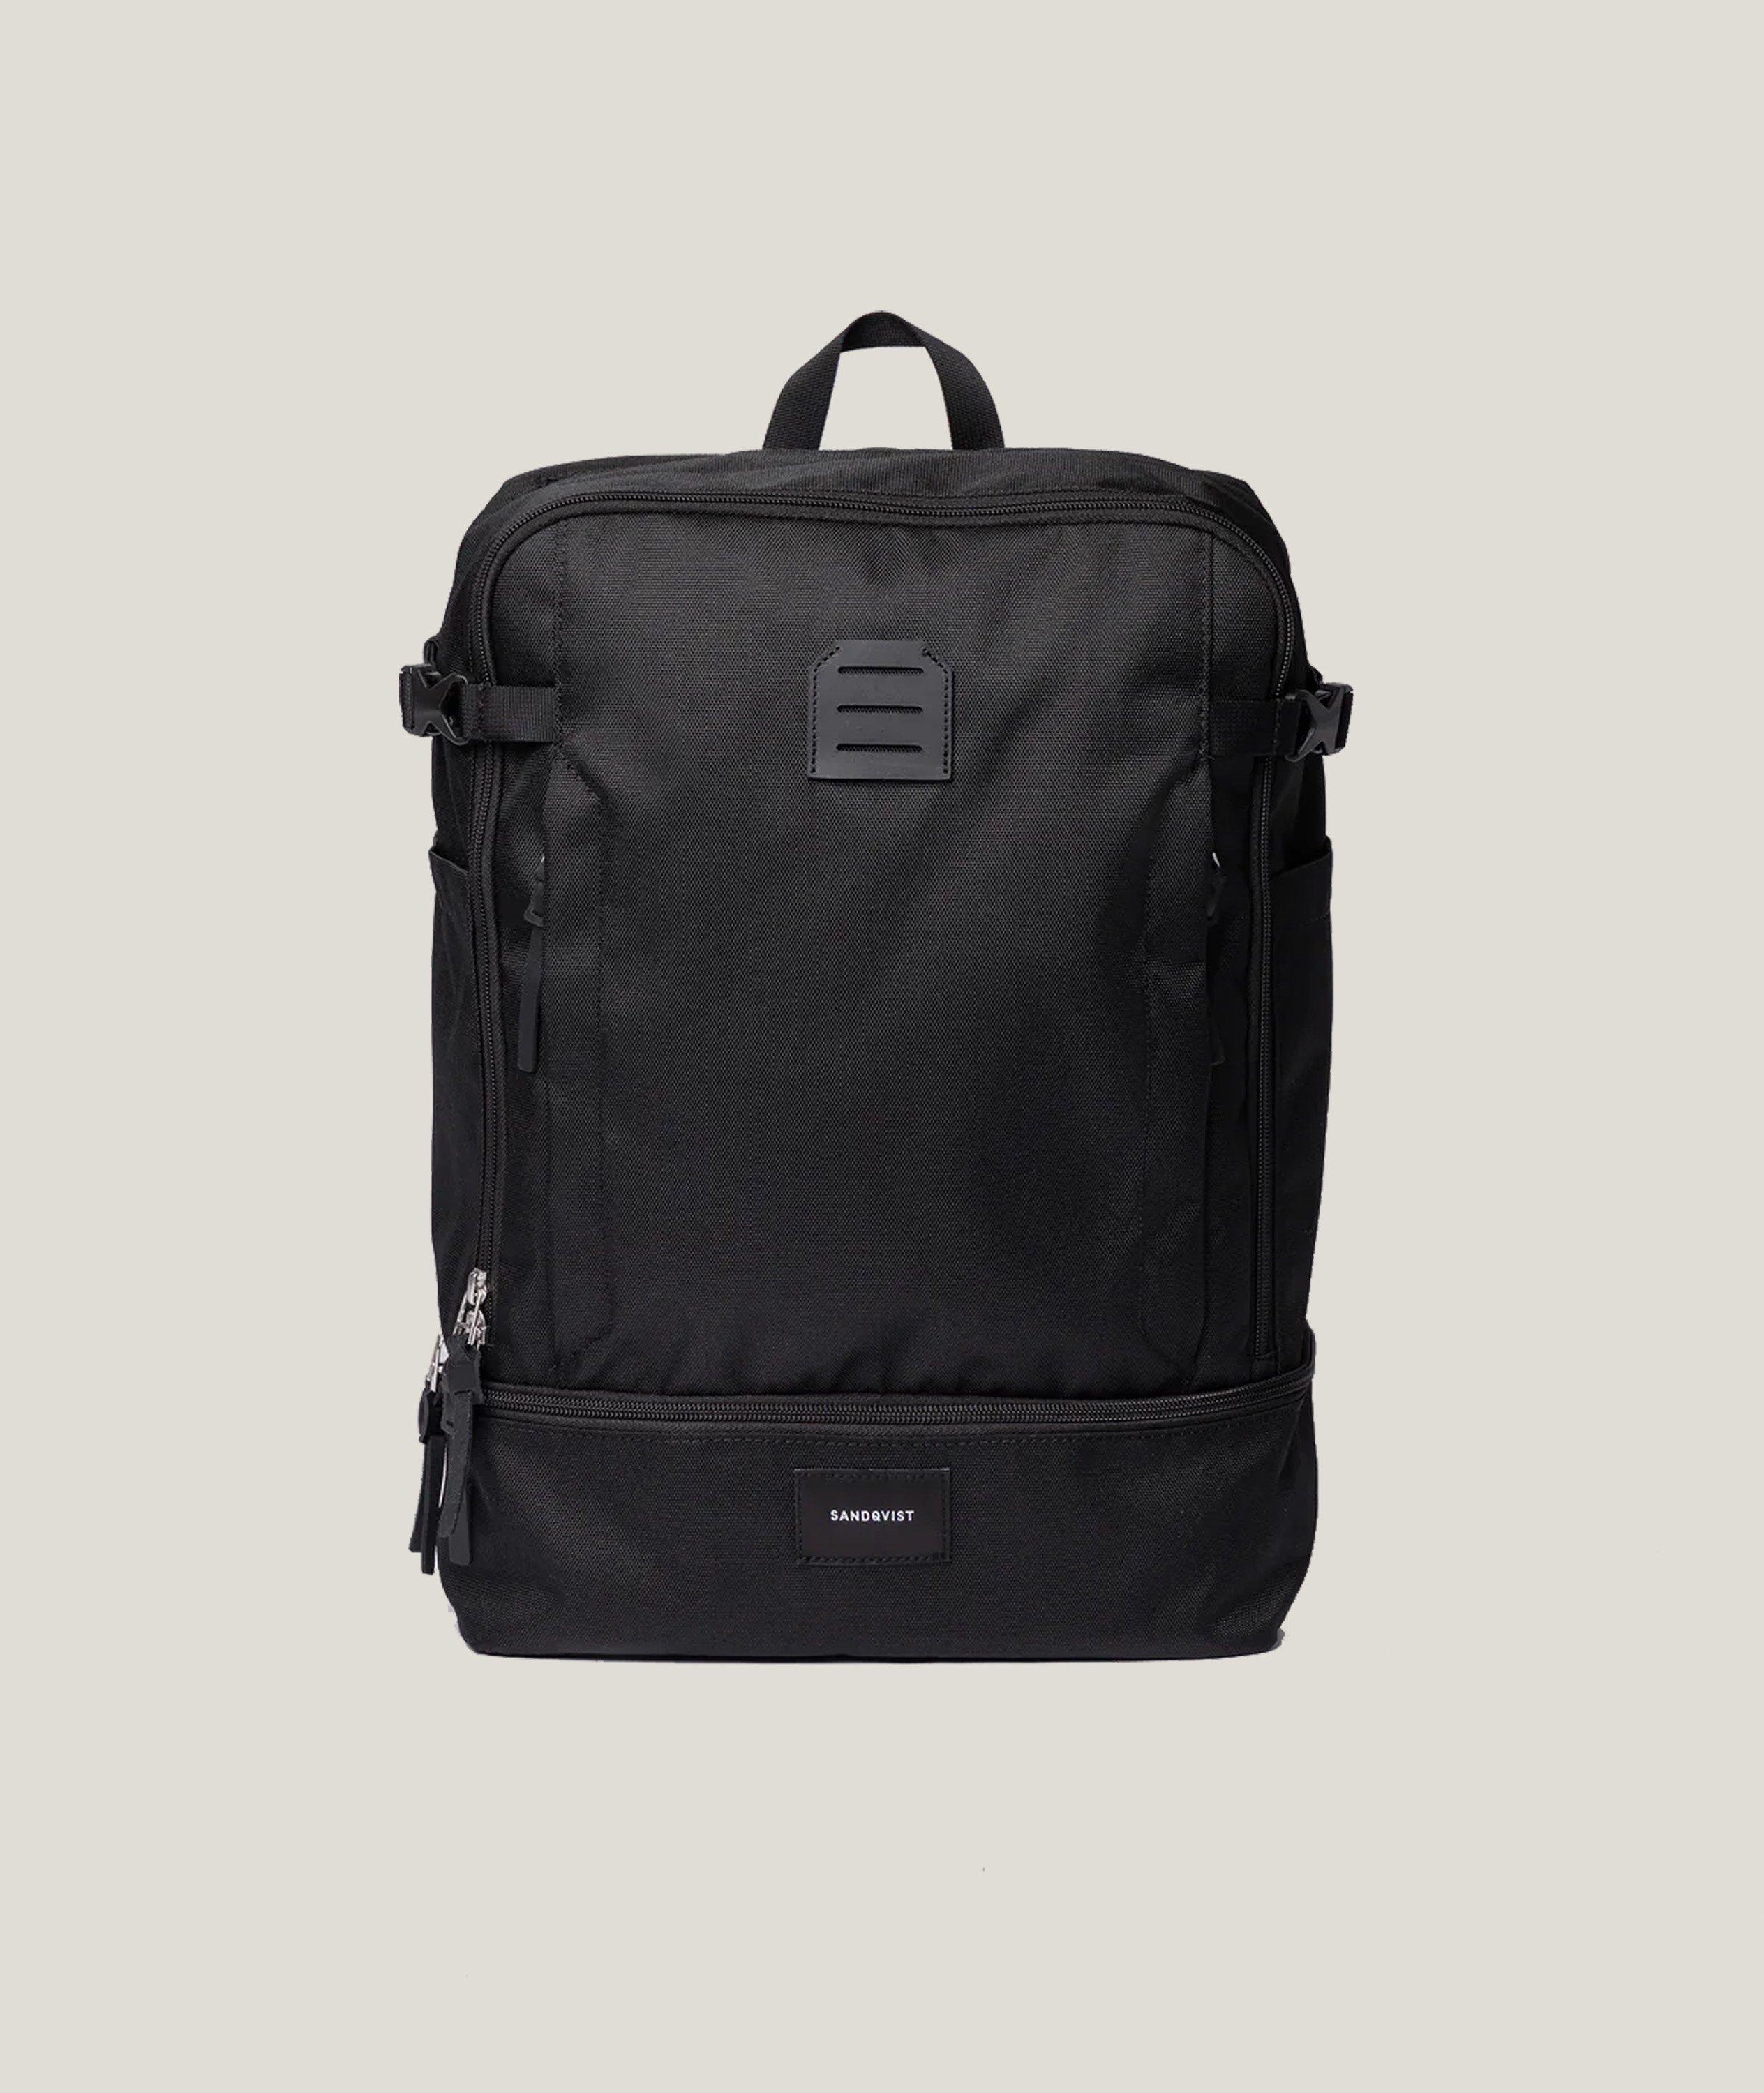 Alde Water-Resistant Backpack image 0